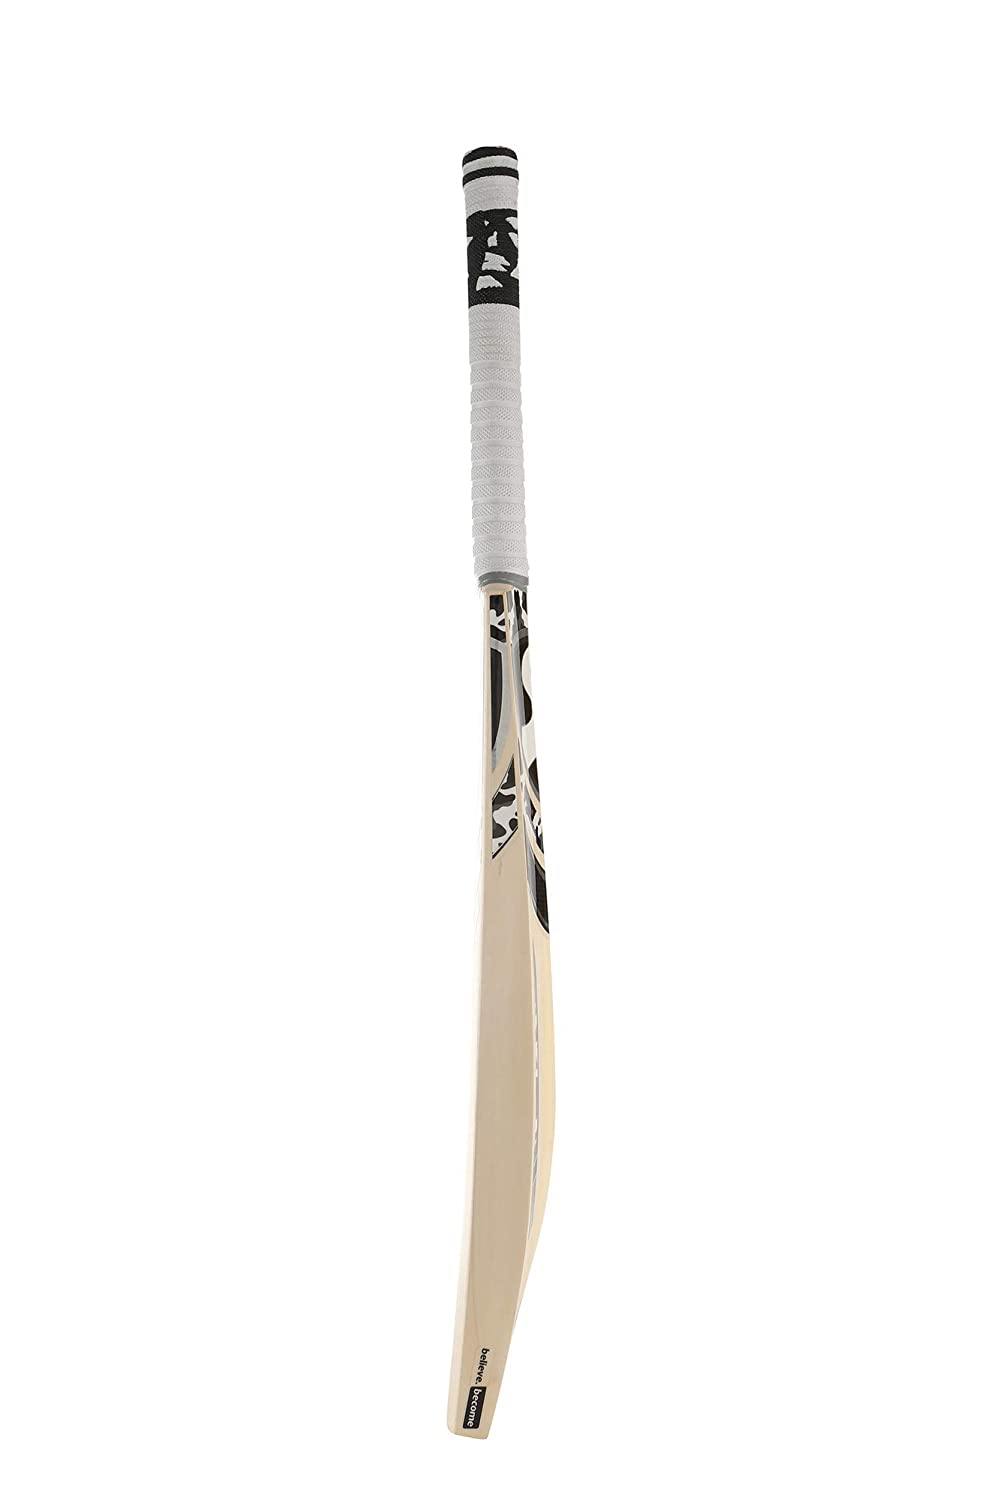 SG KLR Ultimate Cricket Bat - Best Price online Prokicksports.com